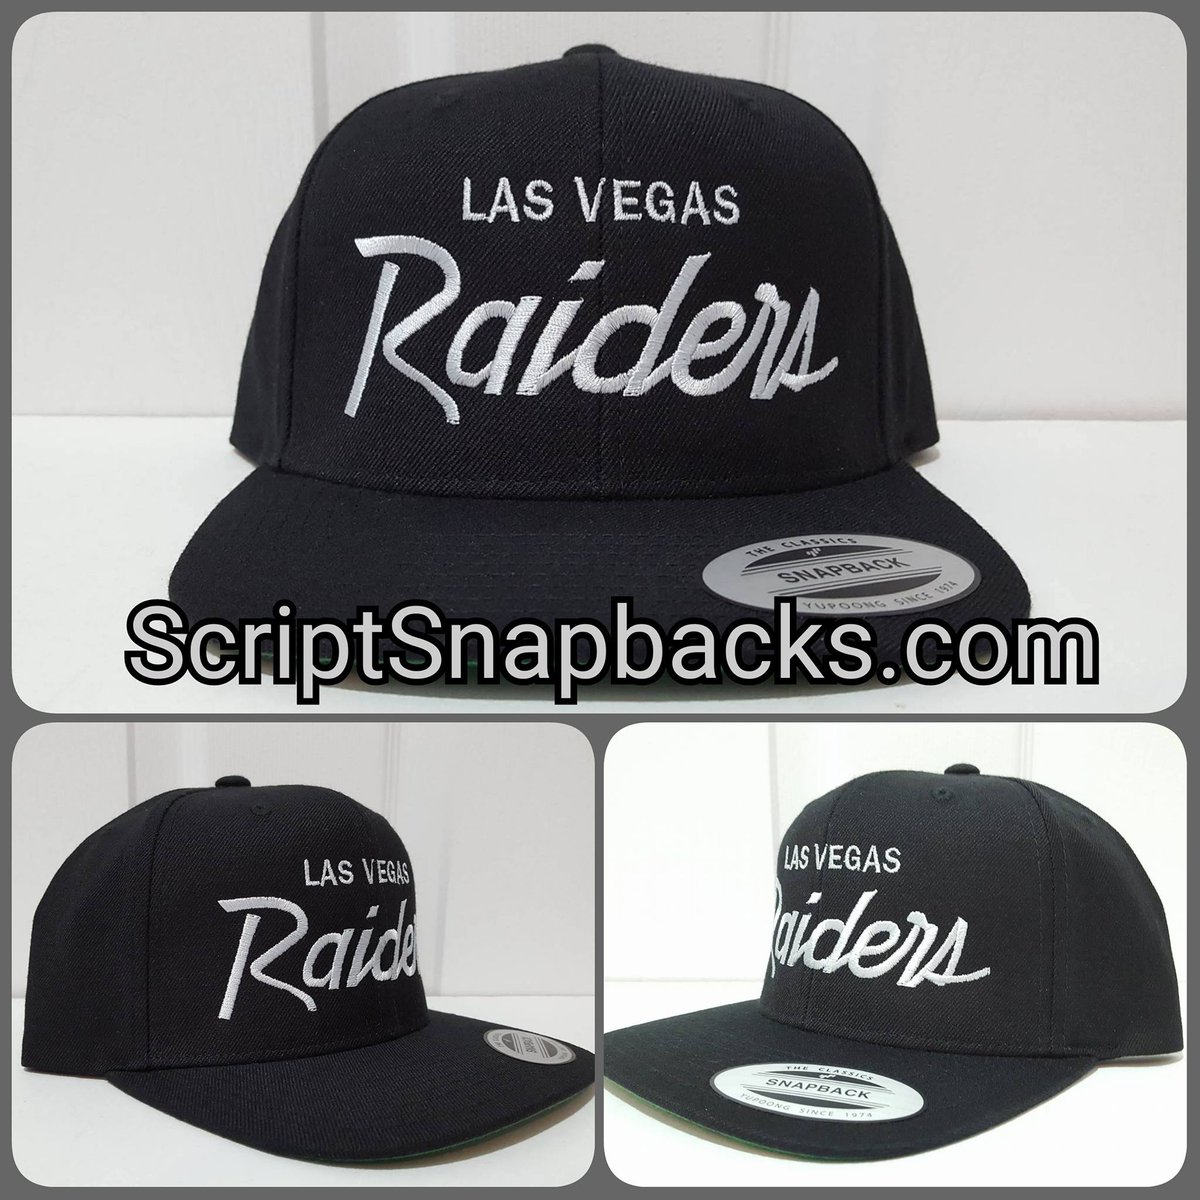 Raiders Hat Baseball Cap Los Angeles Raiders Yupoong Snapback